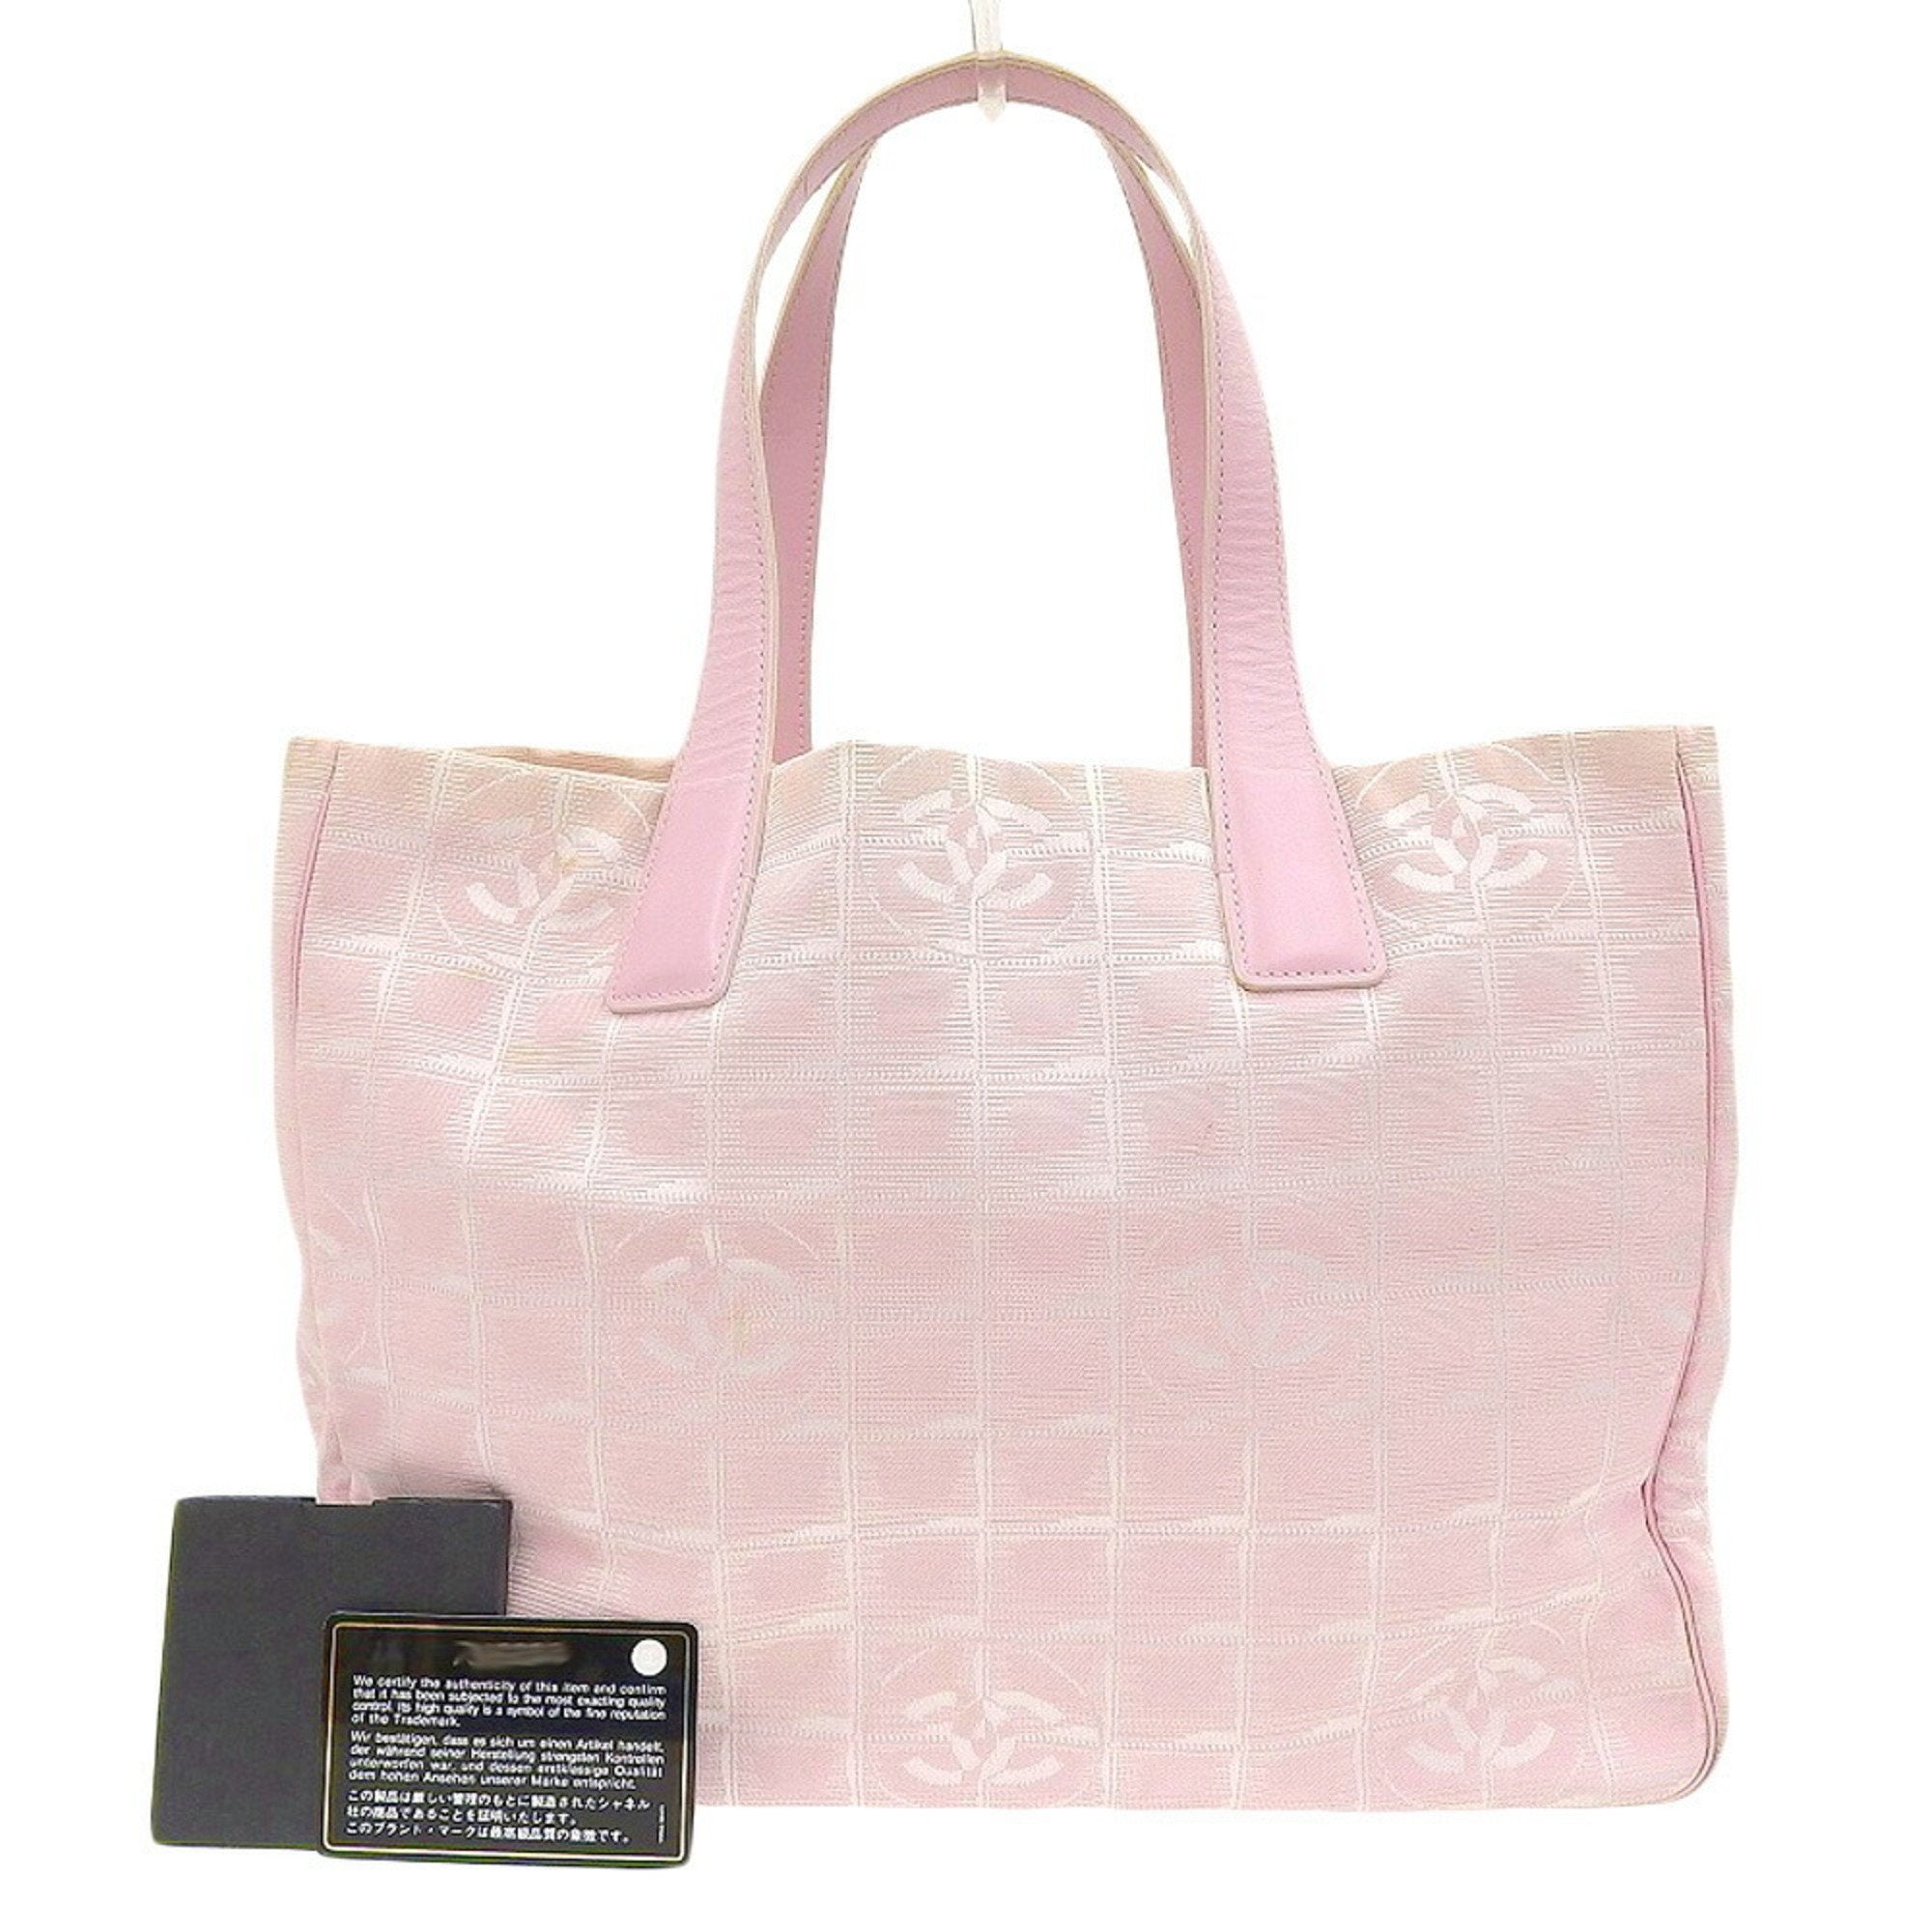 Chanel Beach Bag Pink on Sale GET 53 OFF wwwislandcrematoriumie